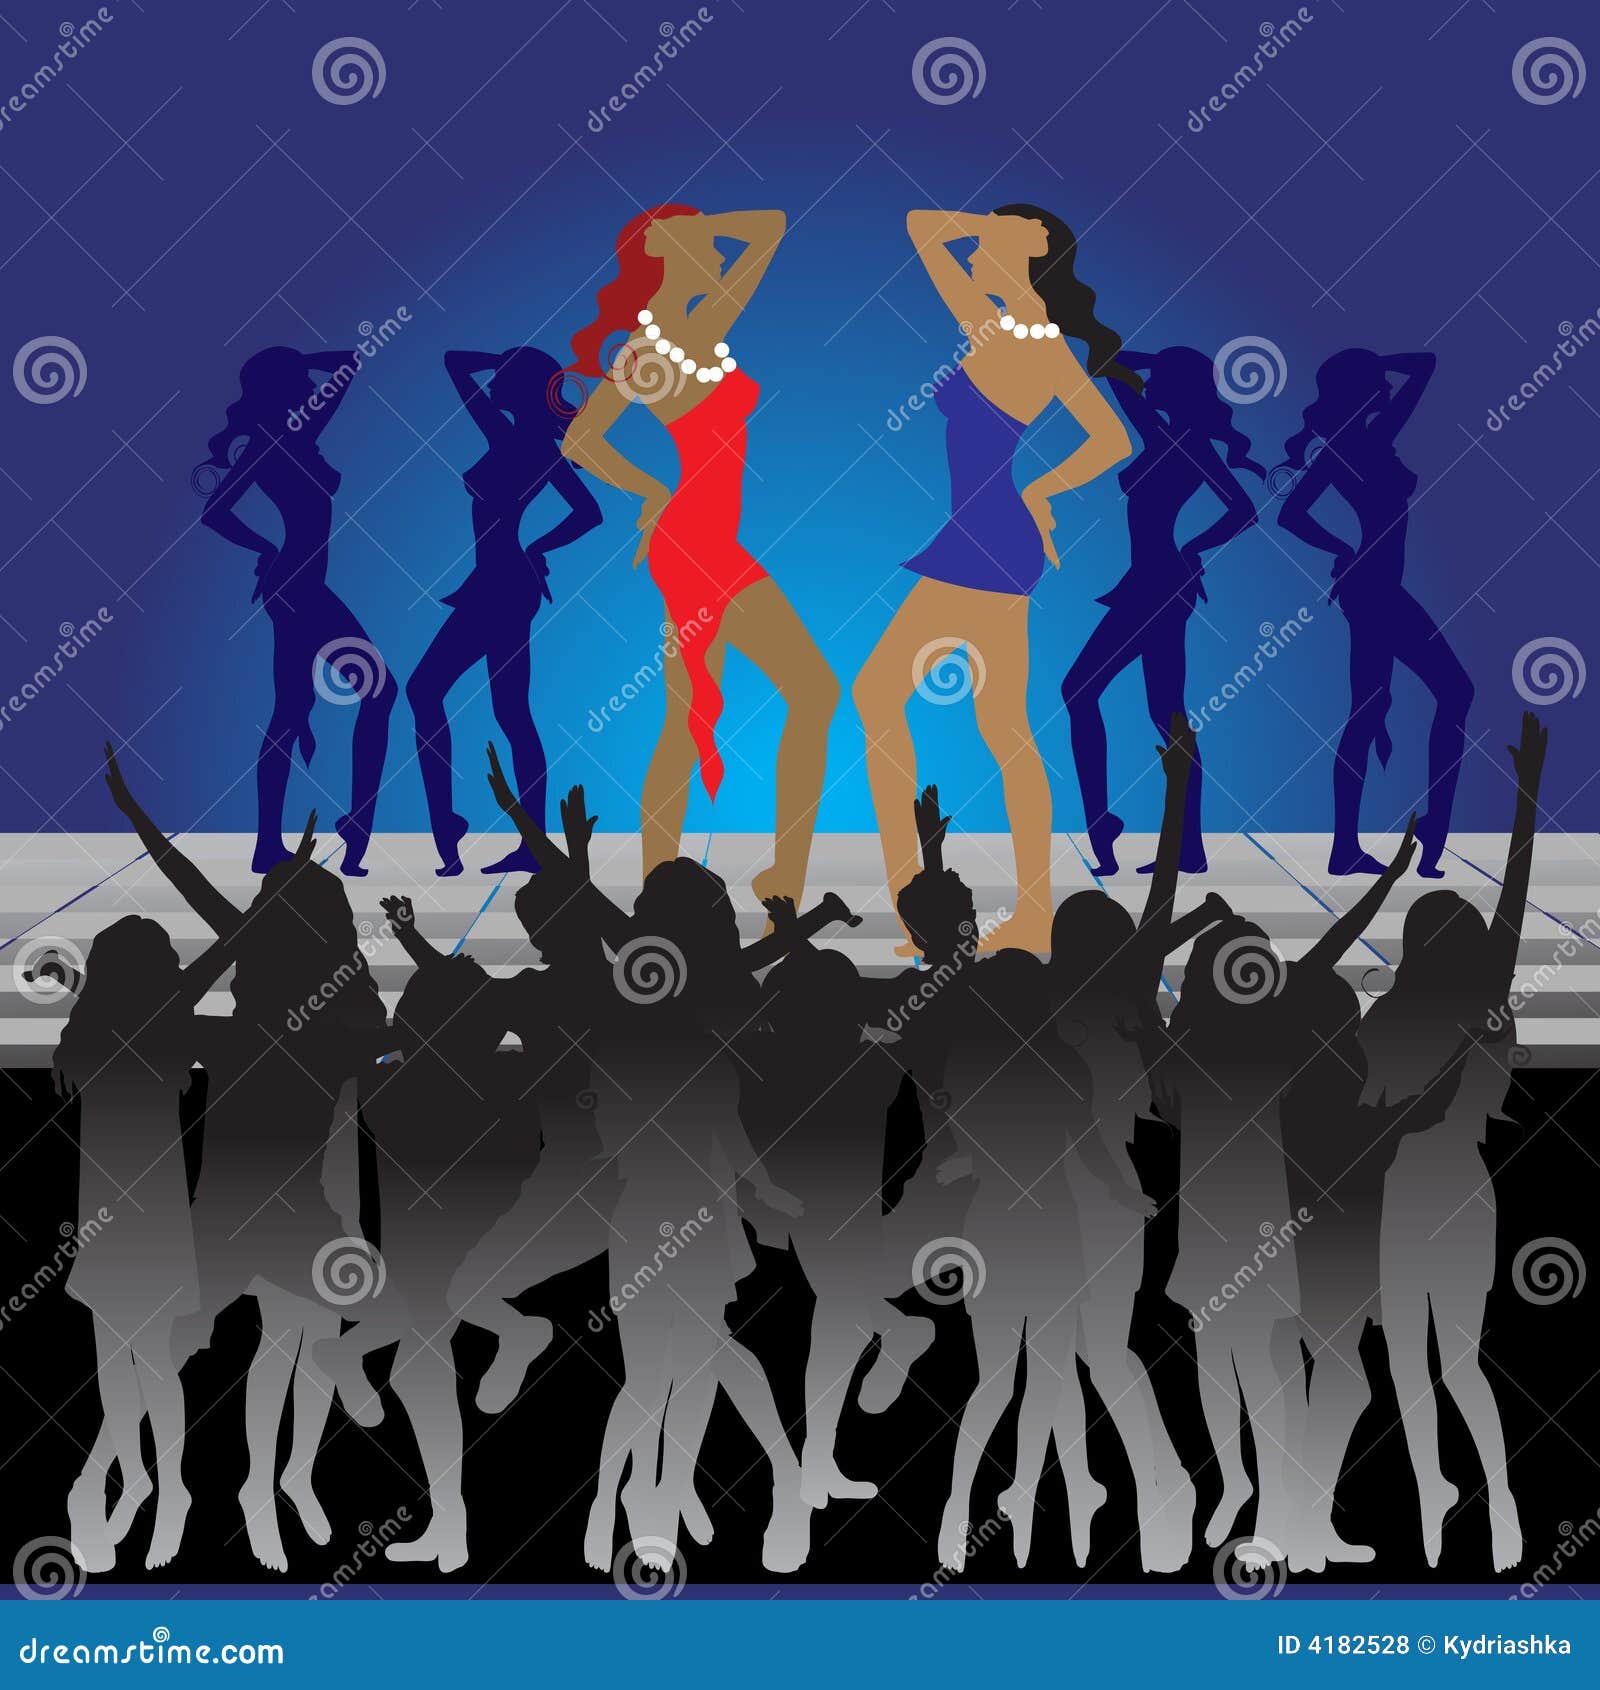 Download this Girls Dancing Dance Floor Night Club picture